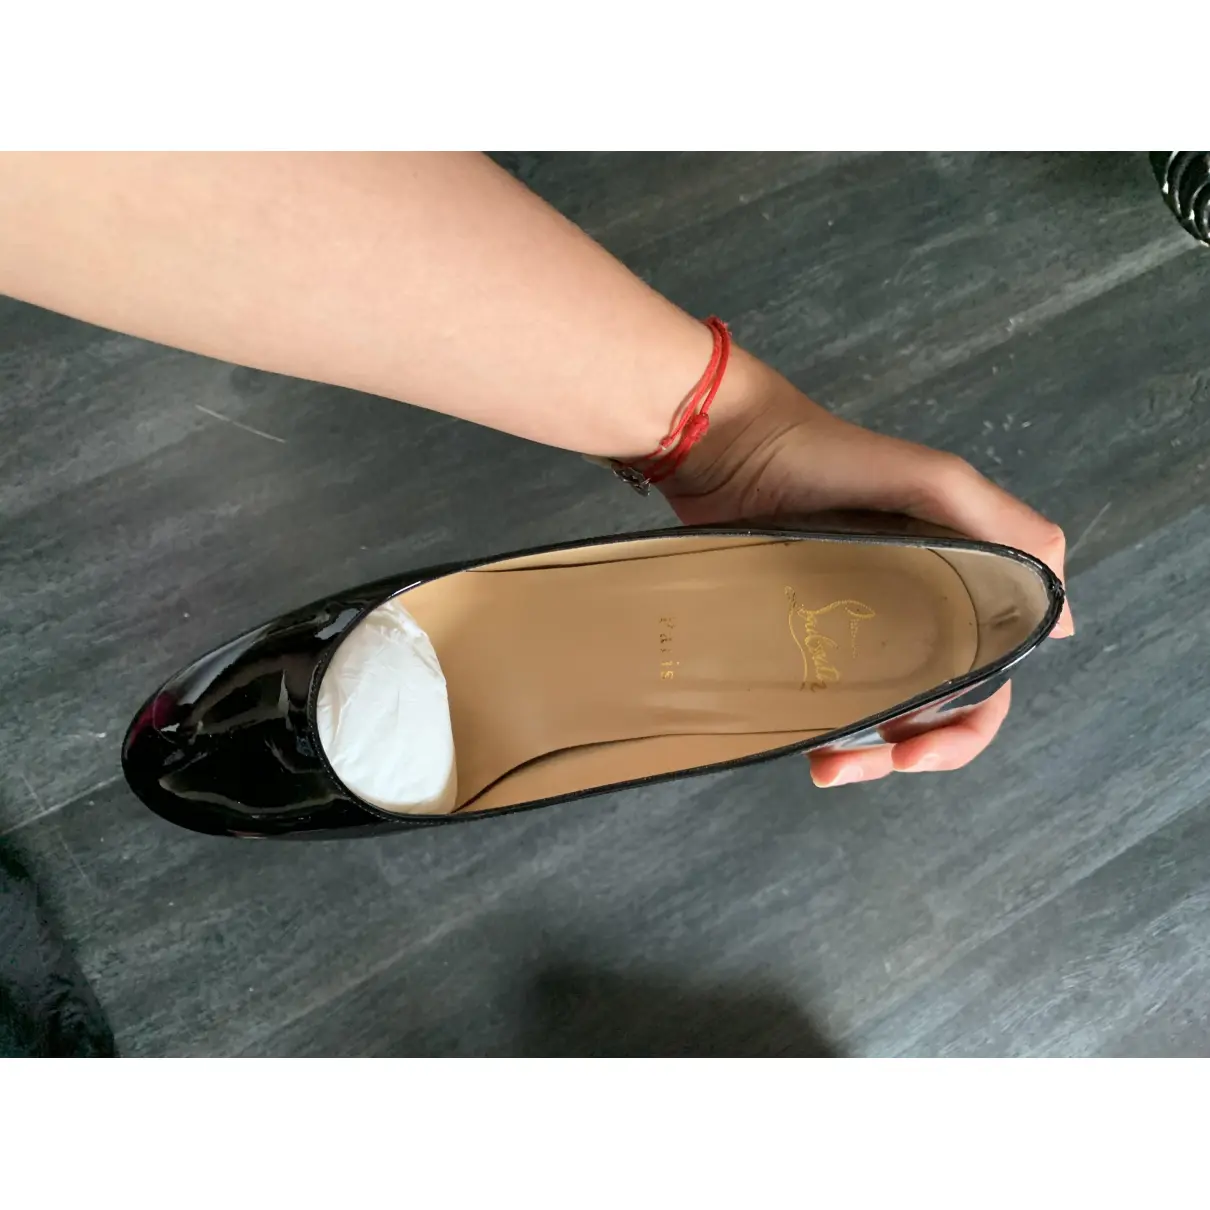 Simple pump leather heels Christian Louboutin